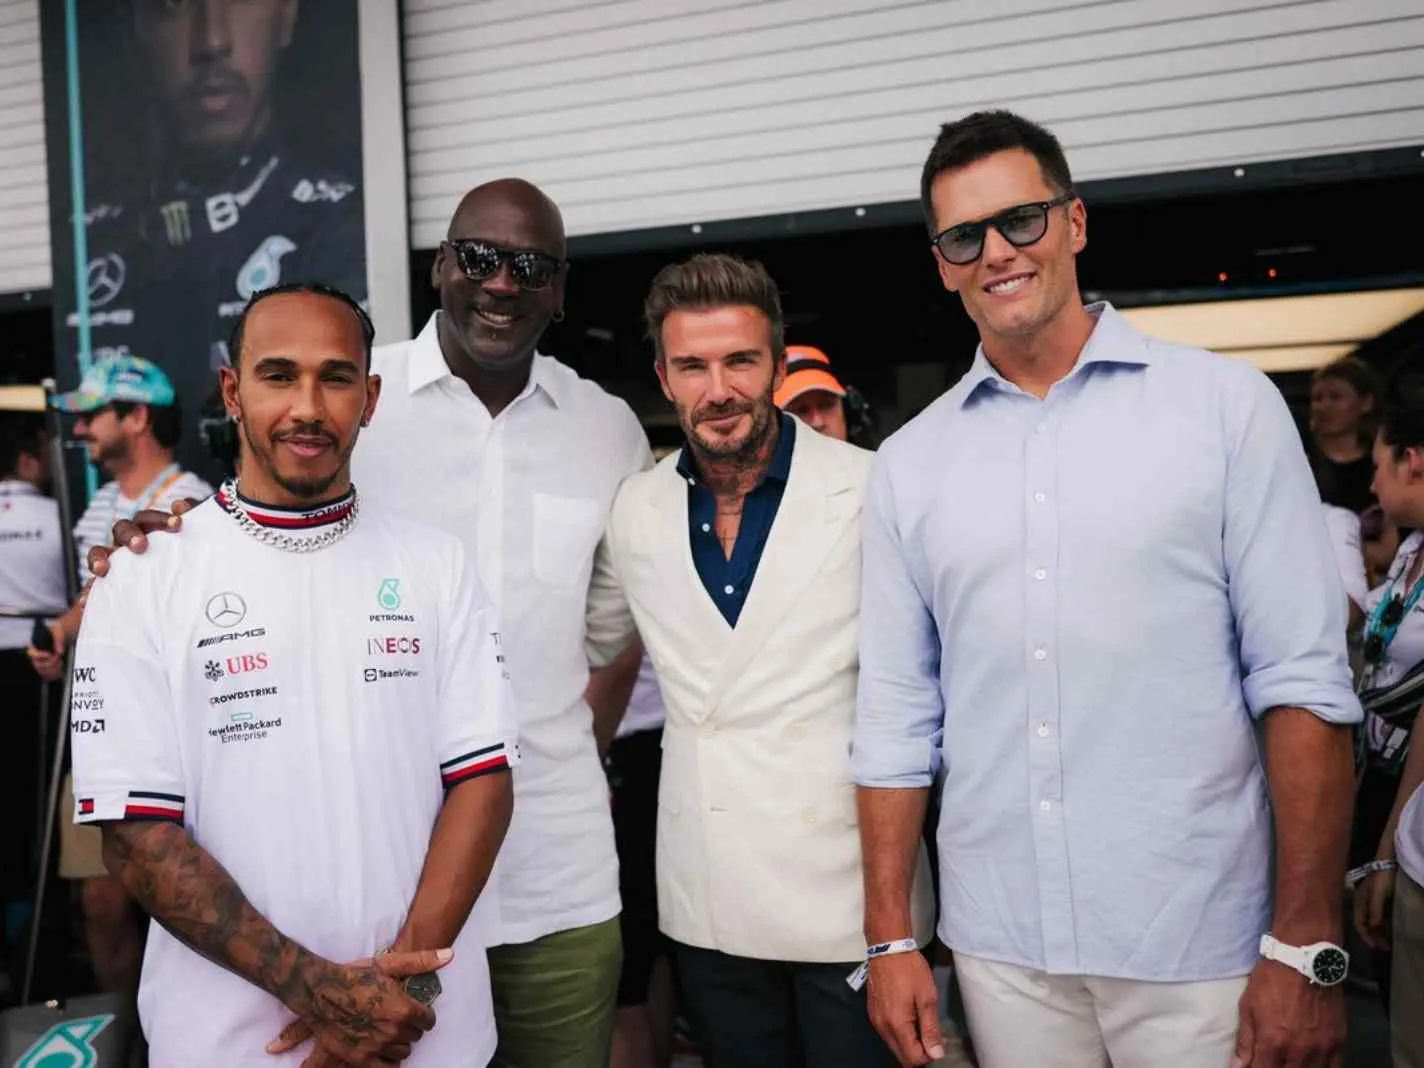 The photo shows Lewis Hamilton, Michael Jordan, David Beckham and Tom Brady together at Miami GP